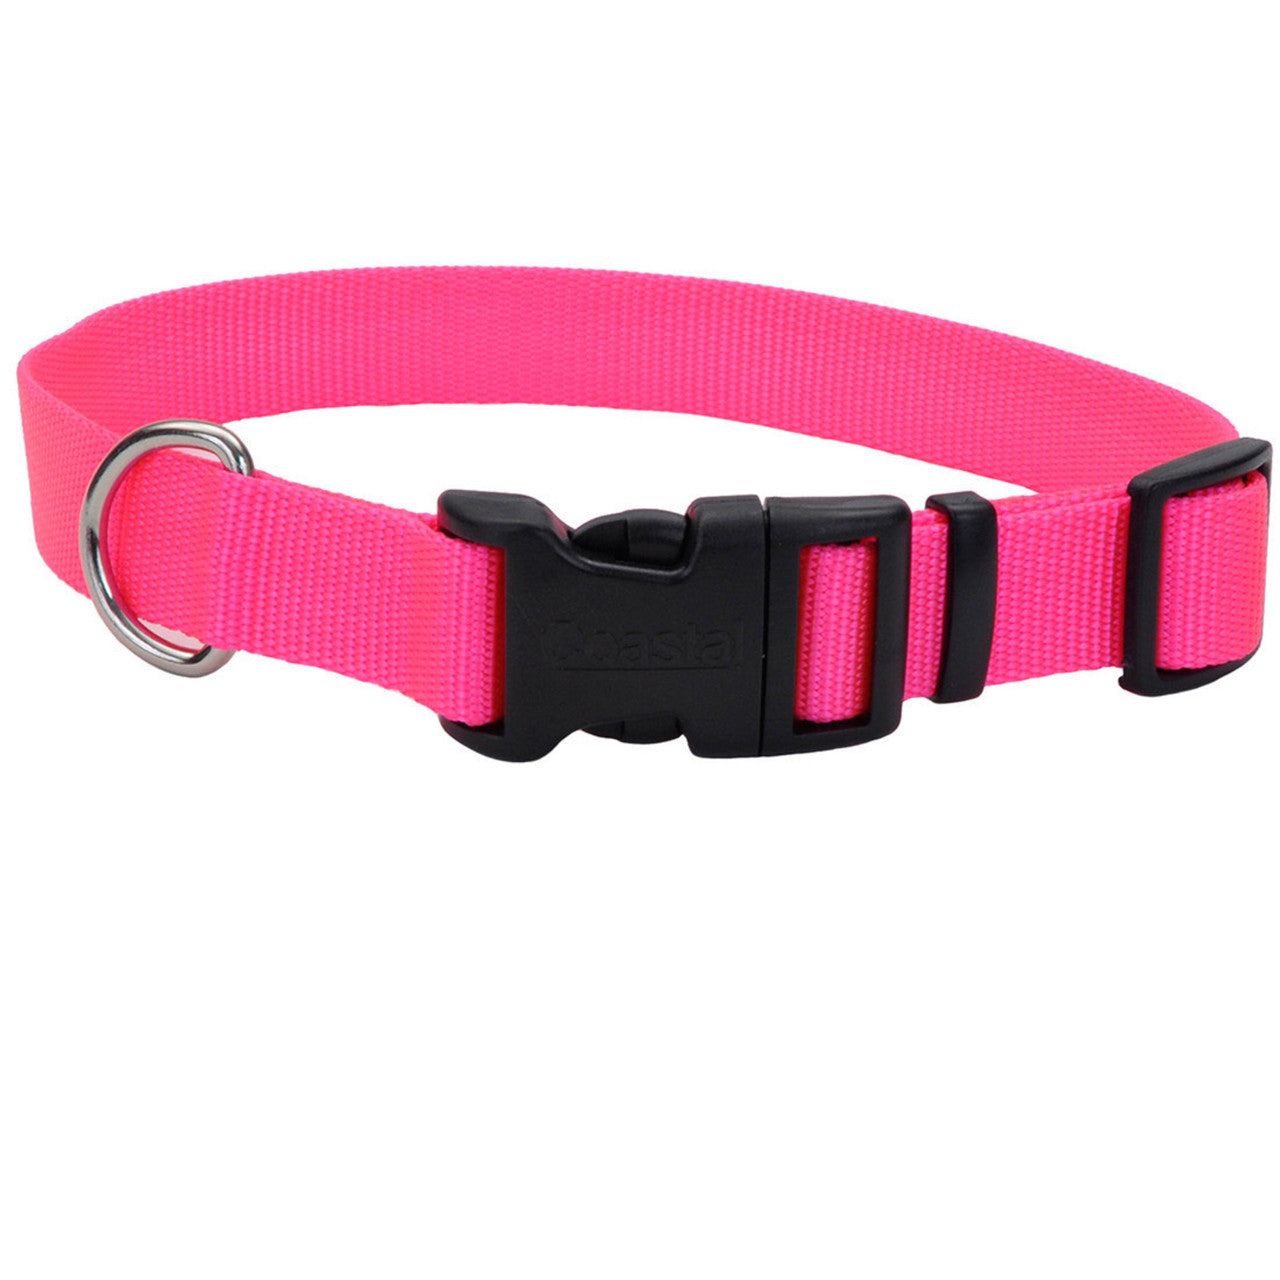 Coastal Adjustable Nylon Dog Collar with Plastic Buckle Neon Pink 5/8 in x 10-14 in